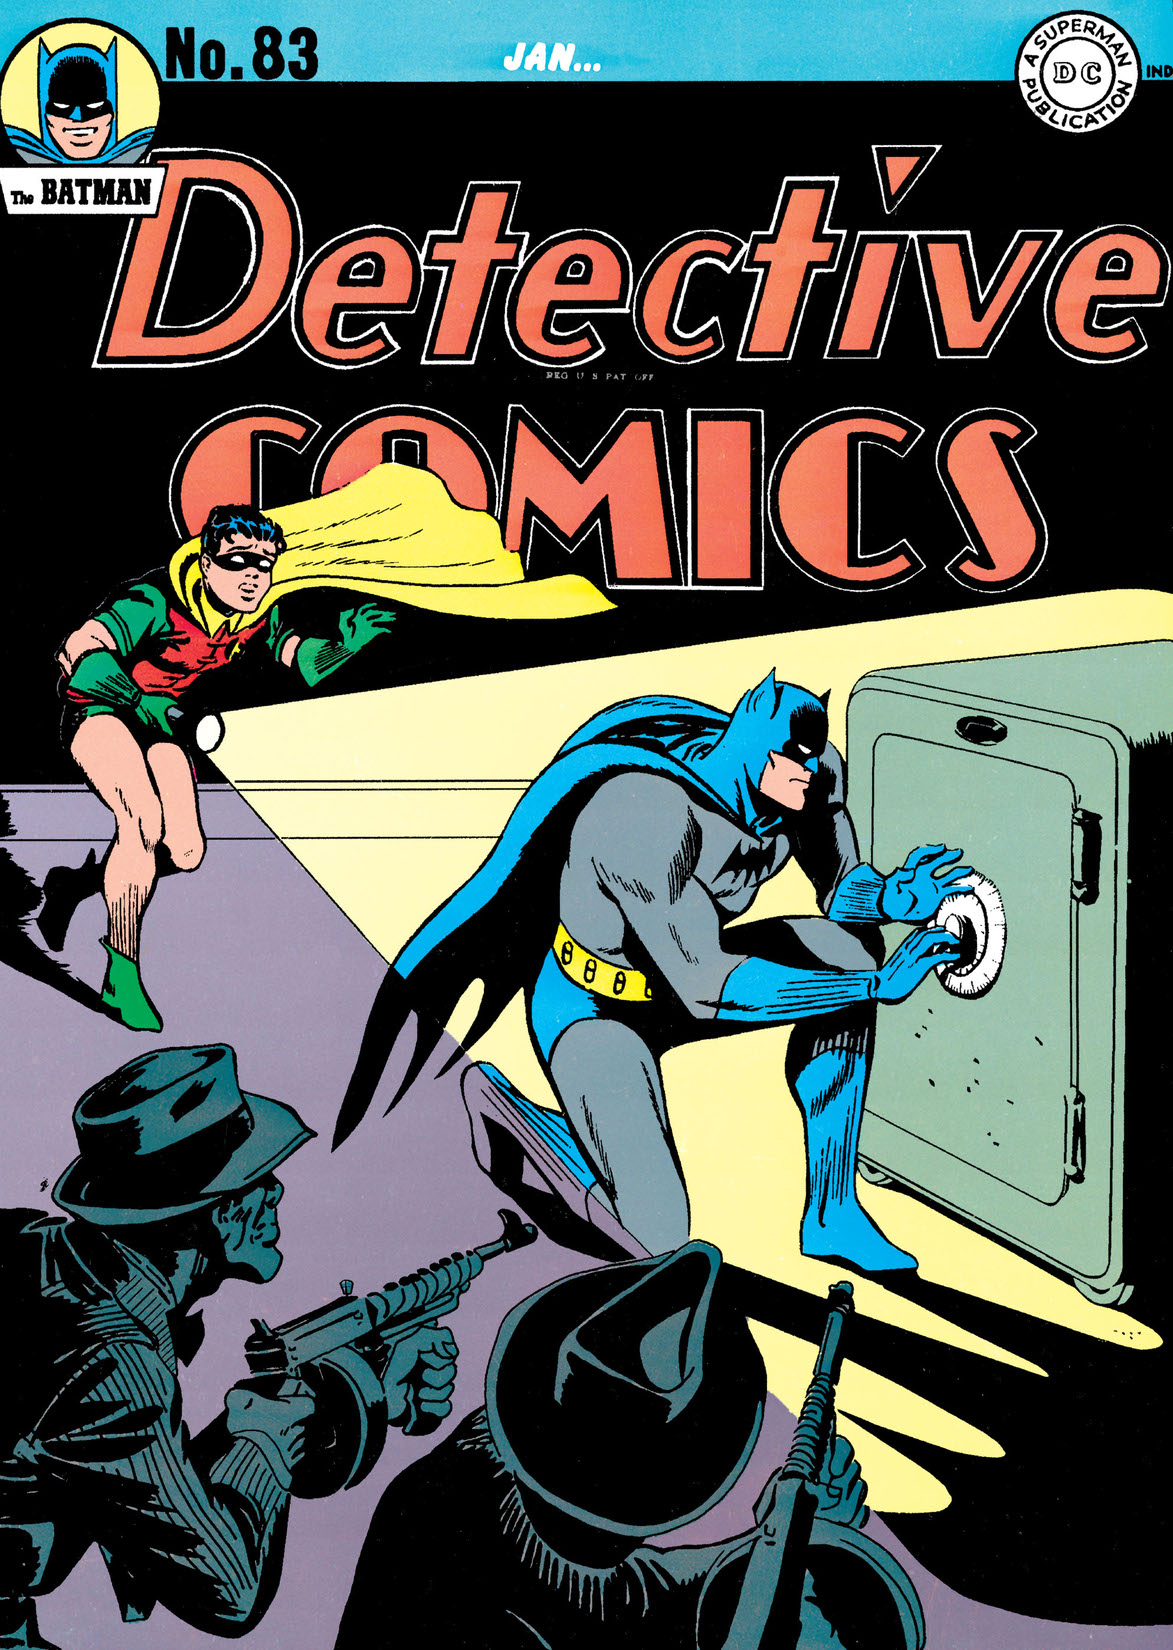 Detective Comics (1937-) #83 preview images